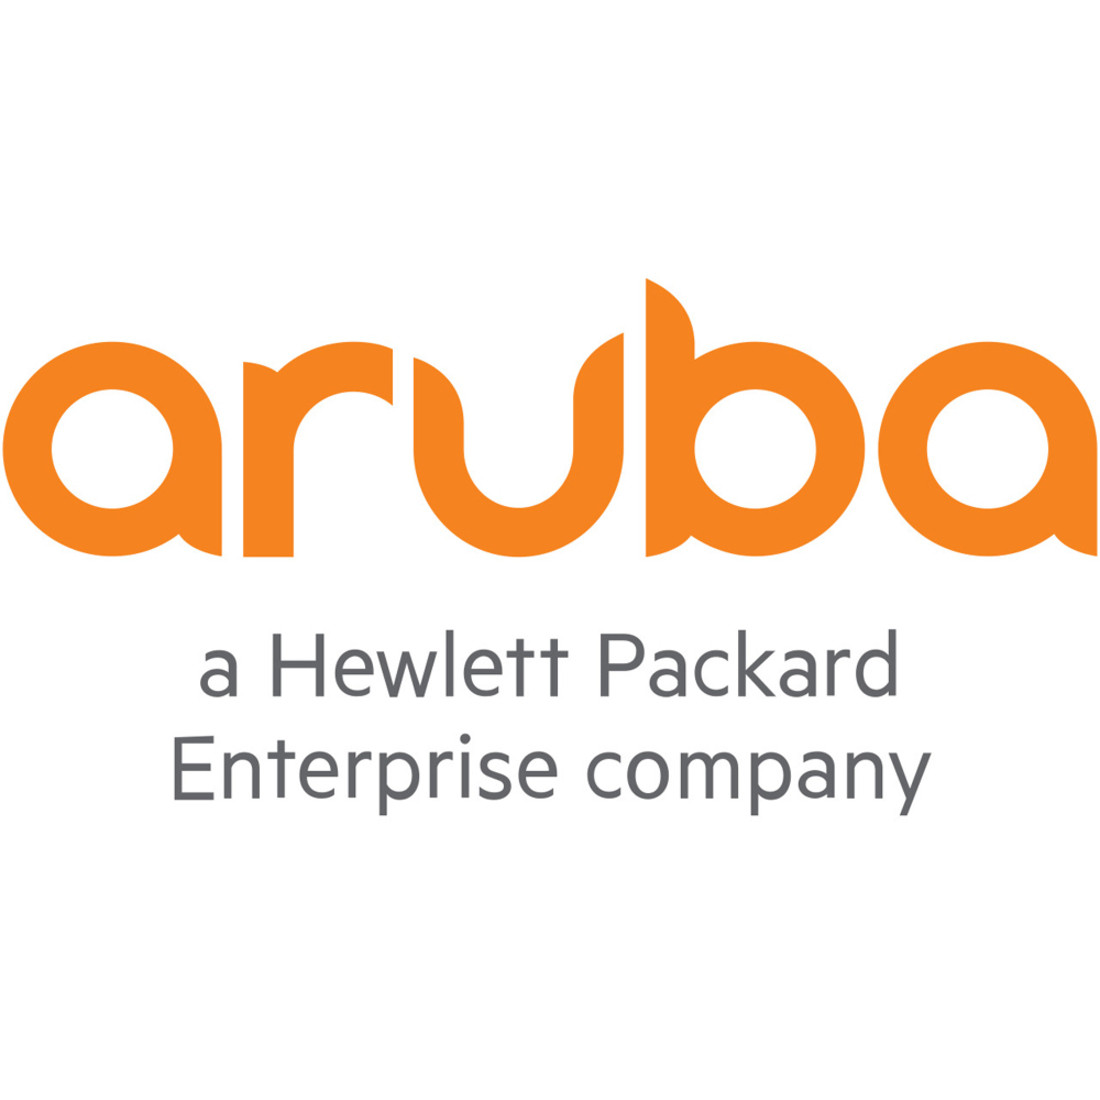 Aruba Foundation Care Extended WarrantyWarranty9 x 5 Next Business DayService DepotExchange HR1E2E